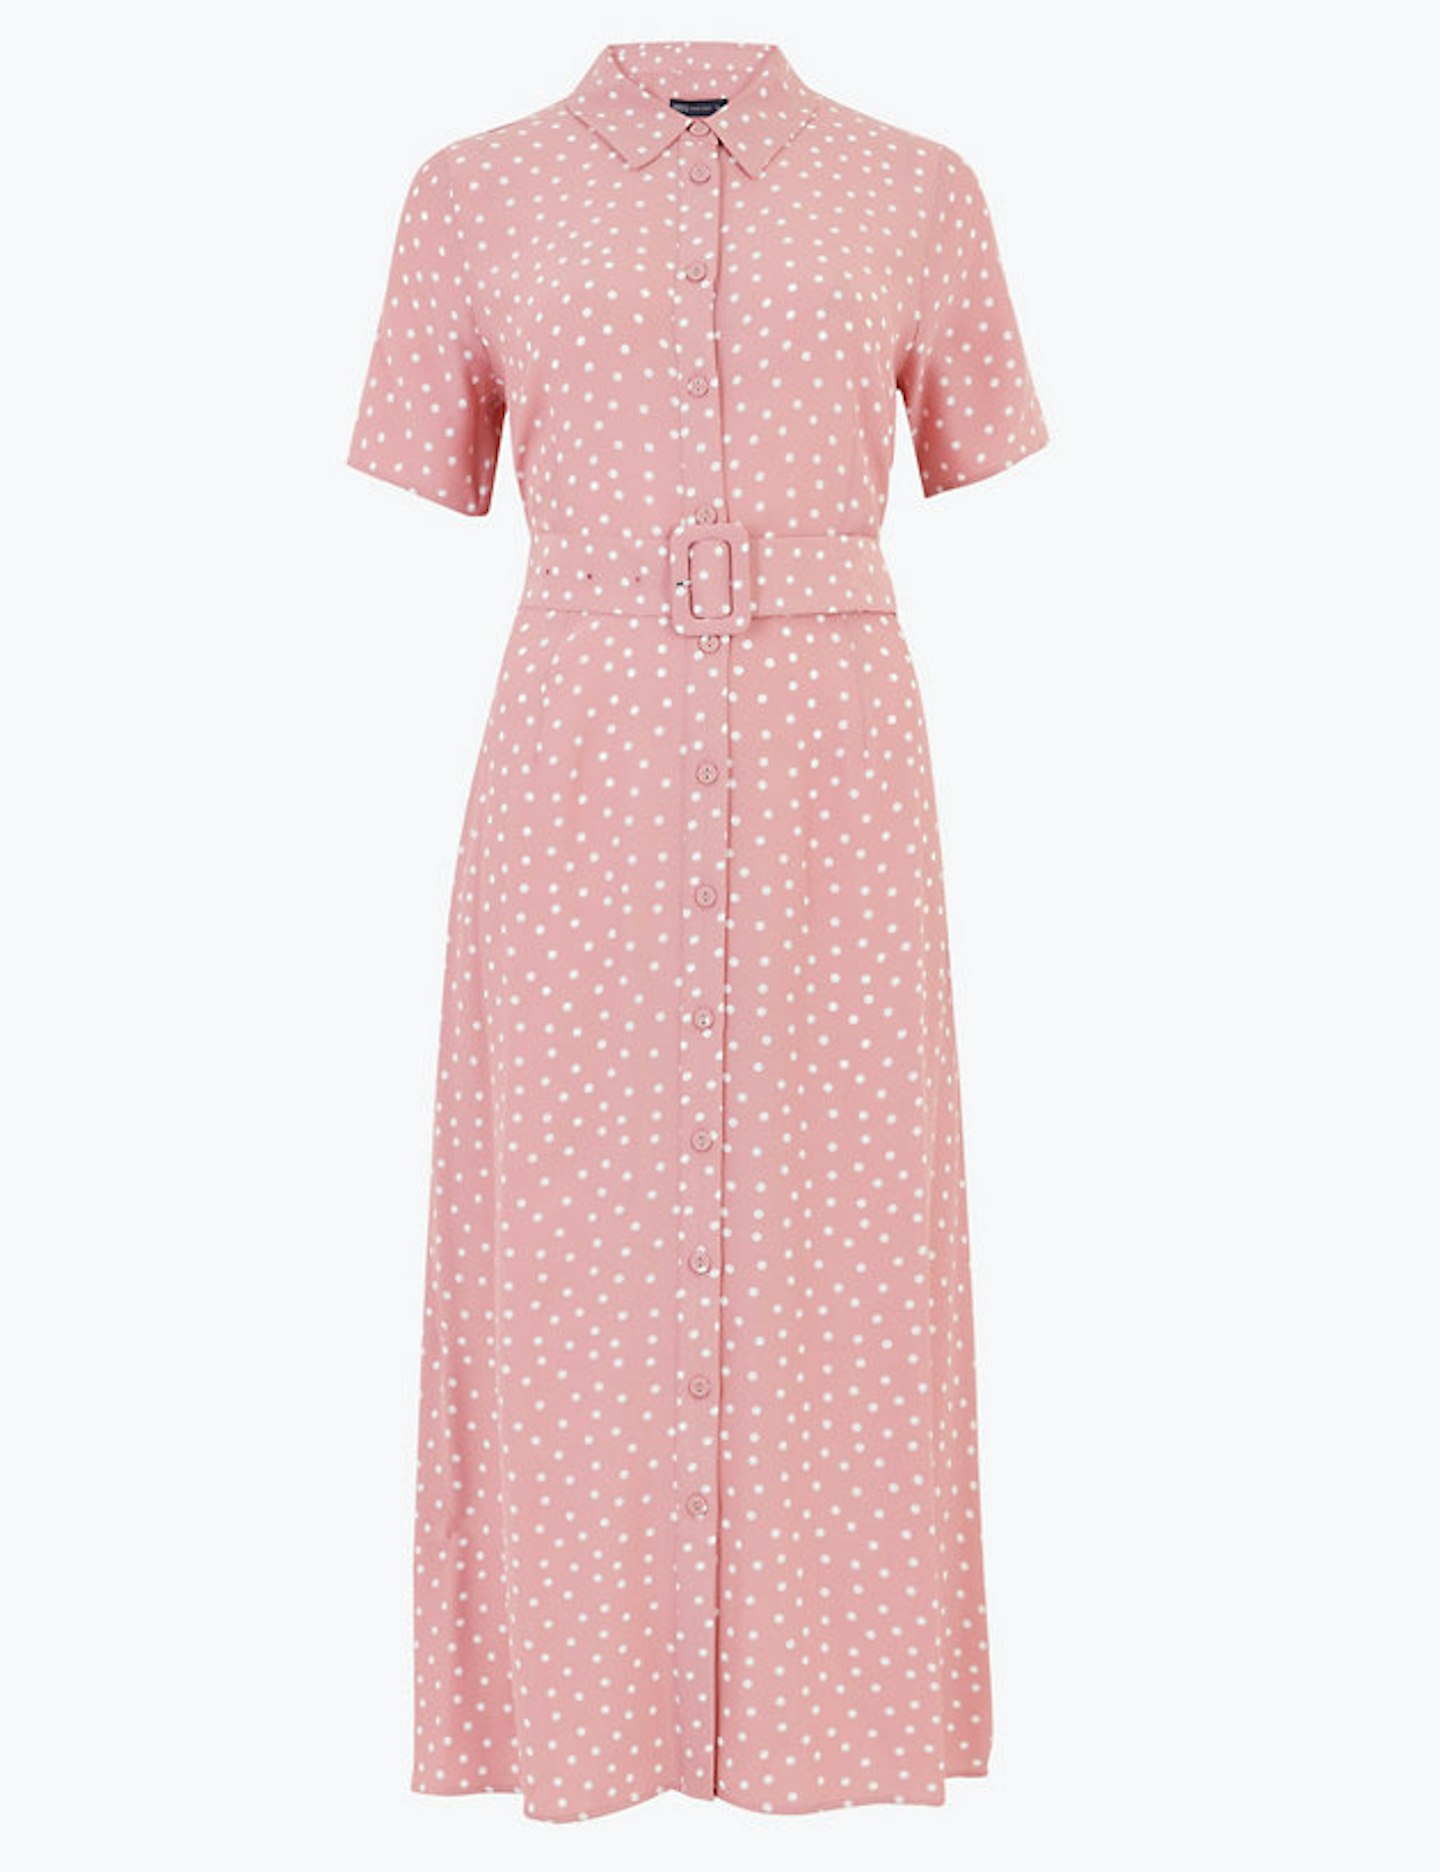 M&S Collection, Shirt Dress, £49.50